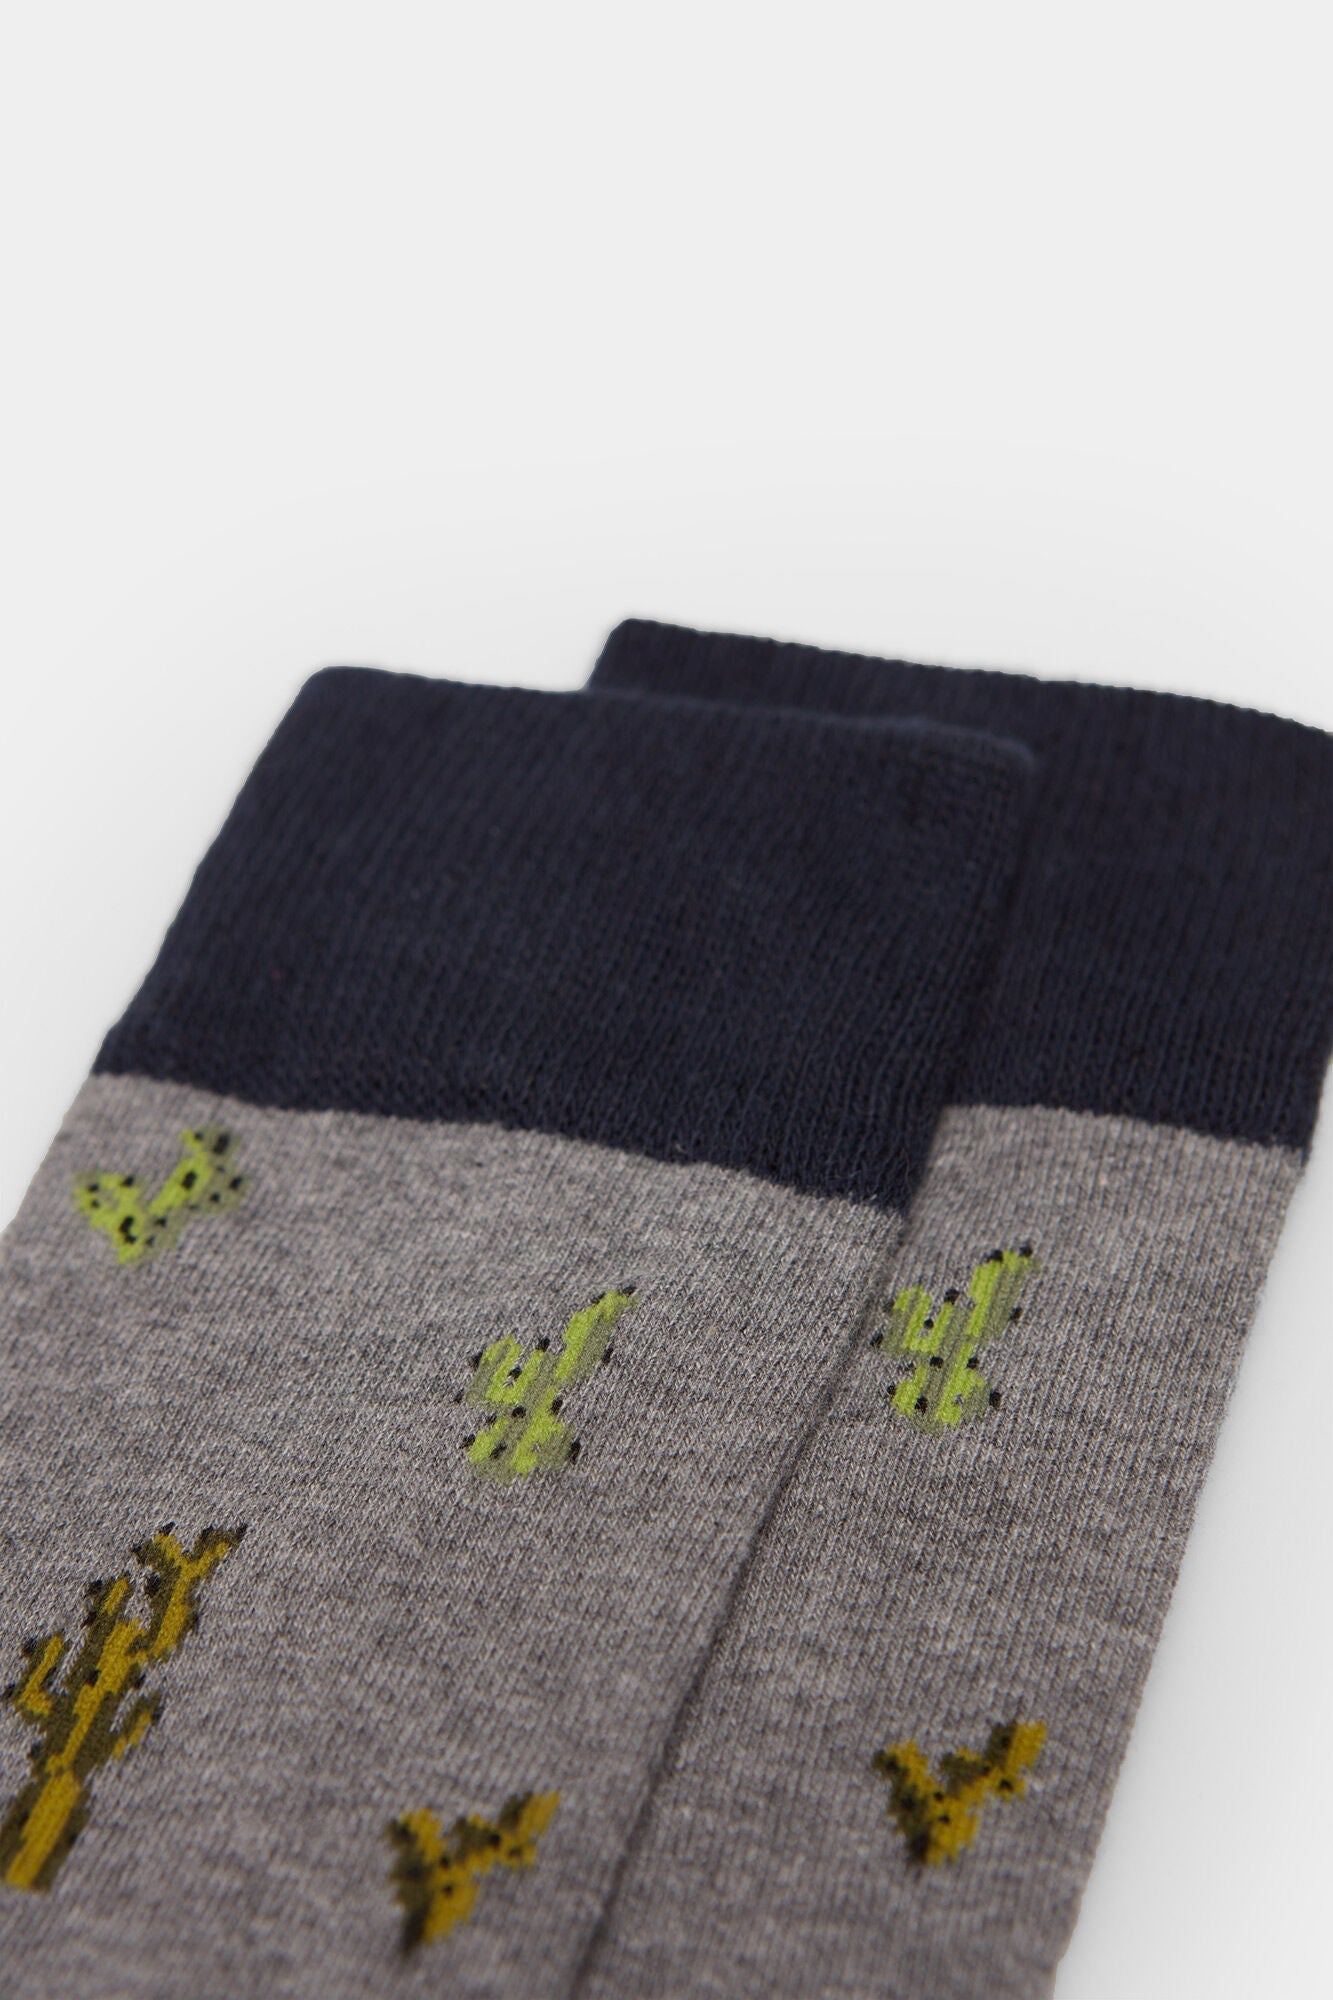 Long cactus socks